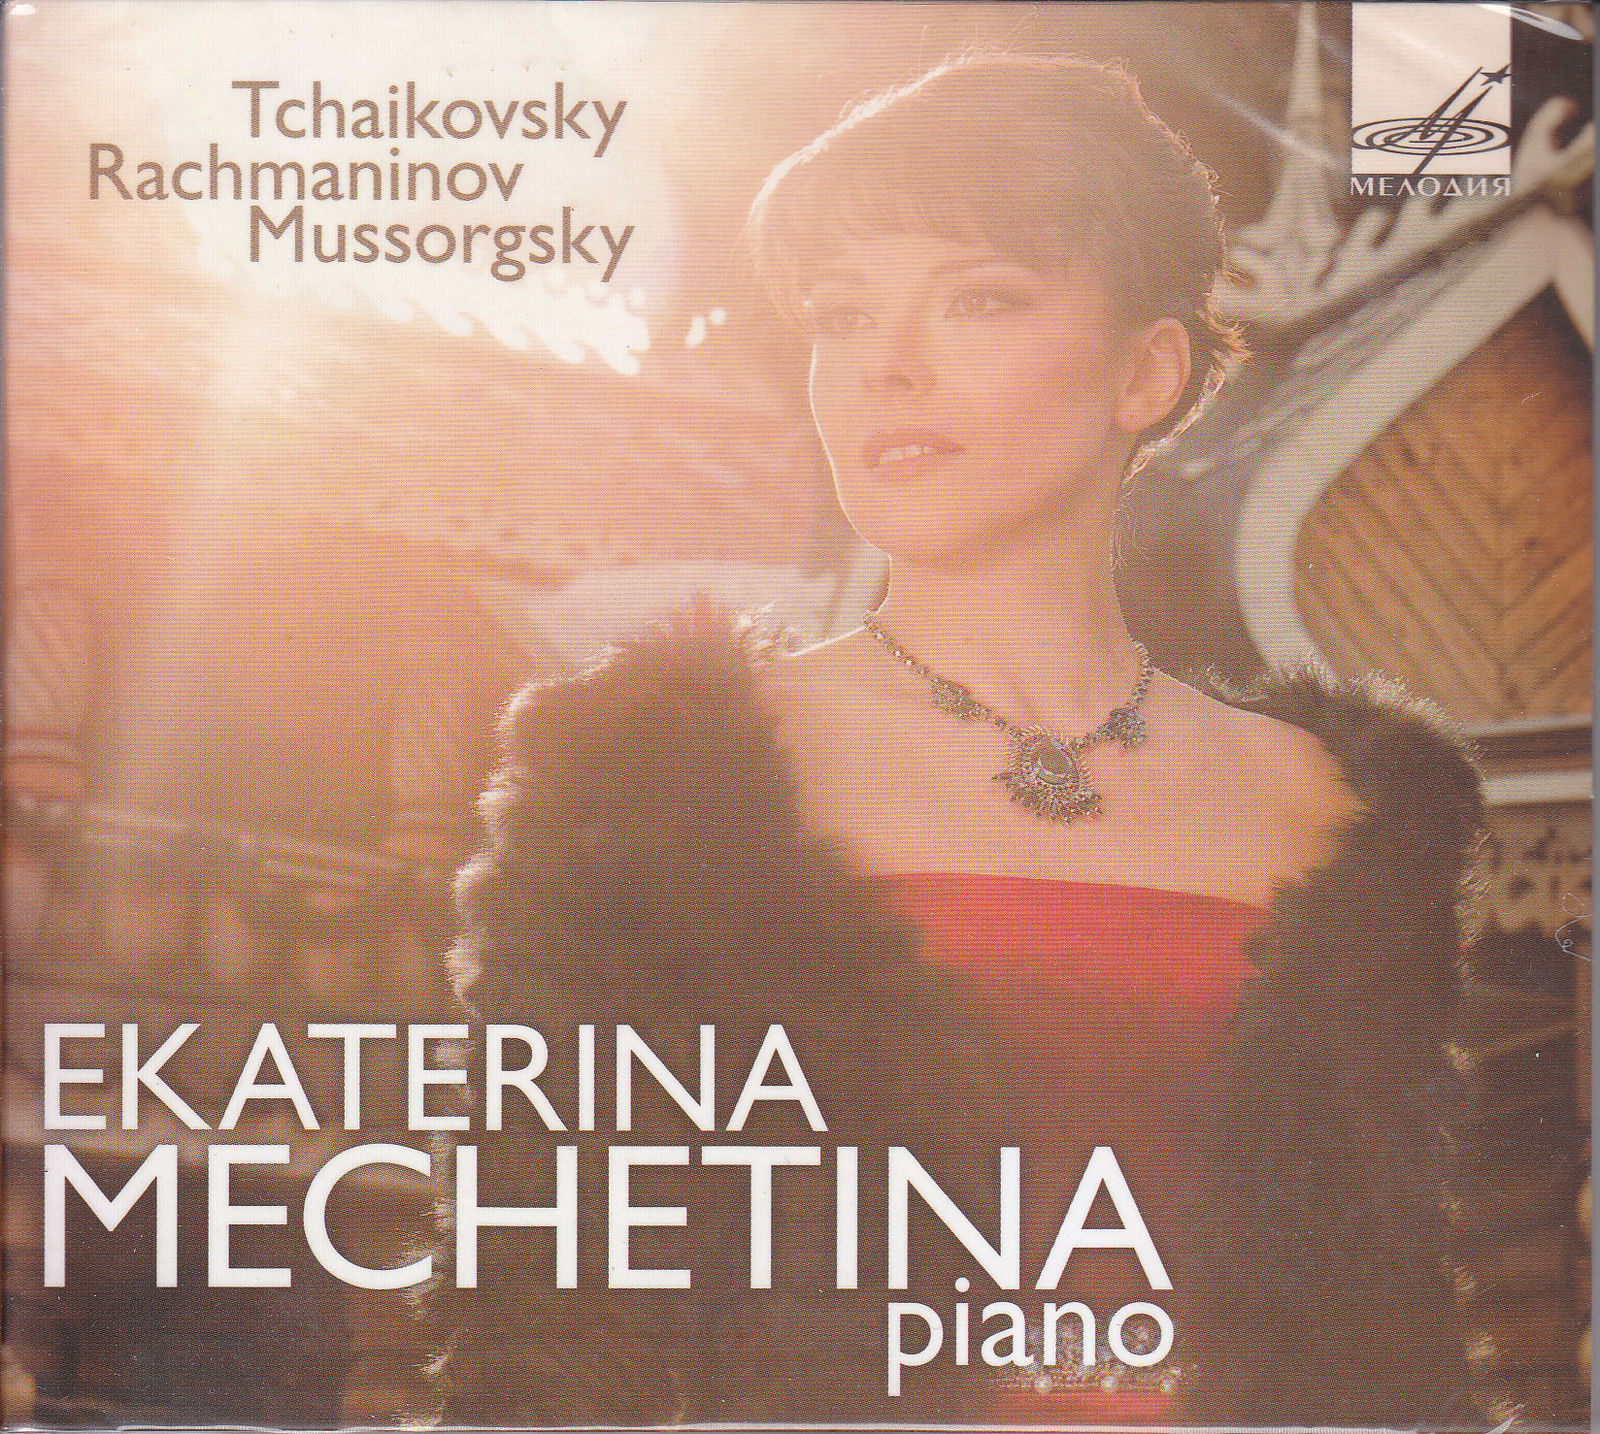 Екатерина Мечетина, фортепиано / Ekaterina MECHETINA, piano. Tchaikovsky, Rachmaninov, Mussorgsky.